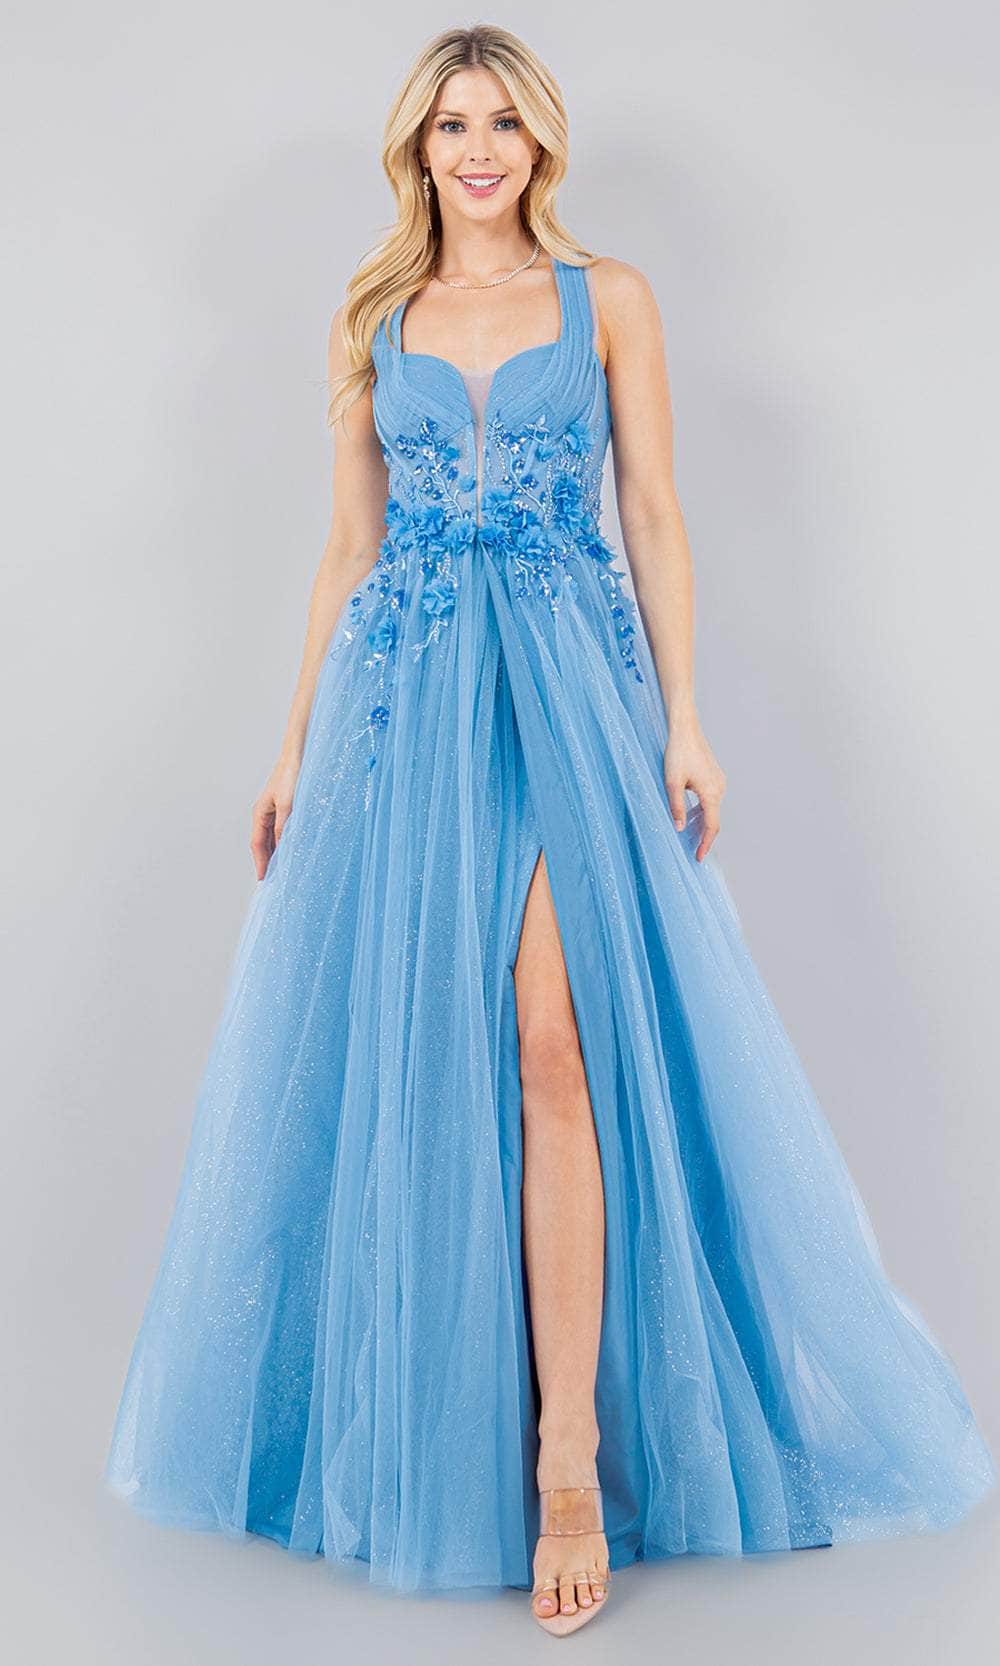 Cinderella Couture 8076J - Halter Neck A-line Dress